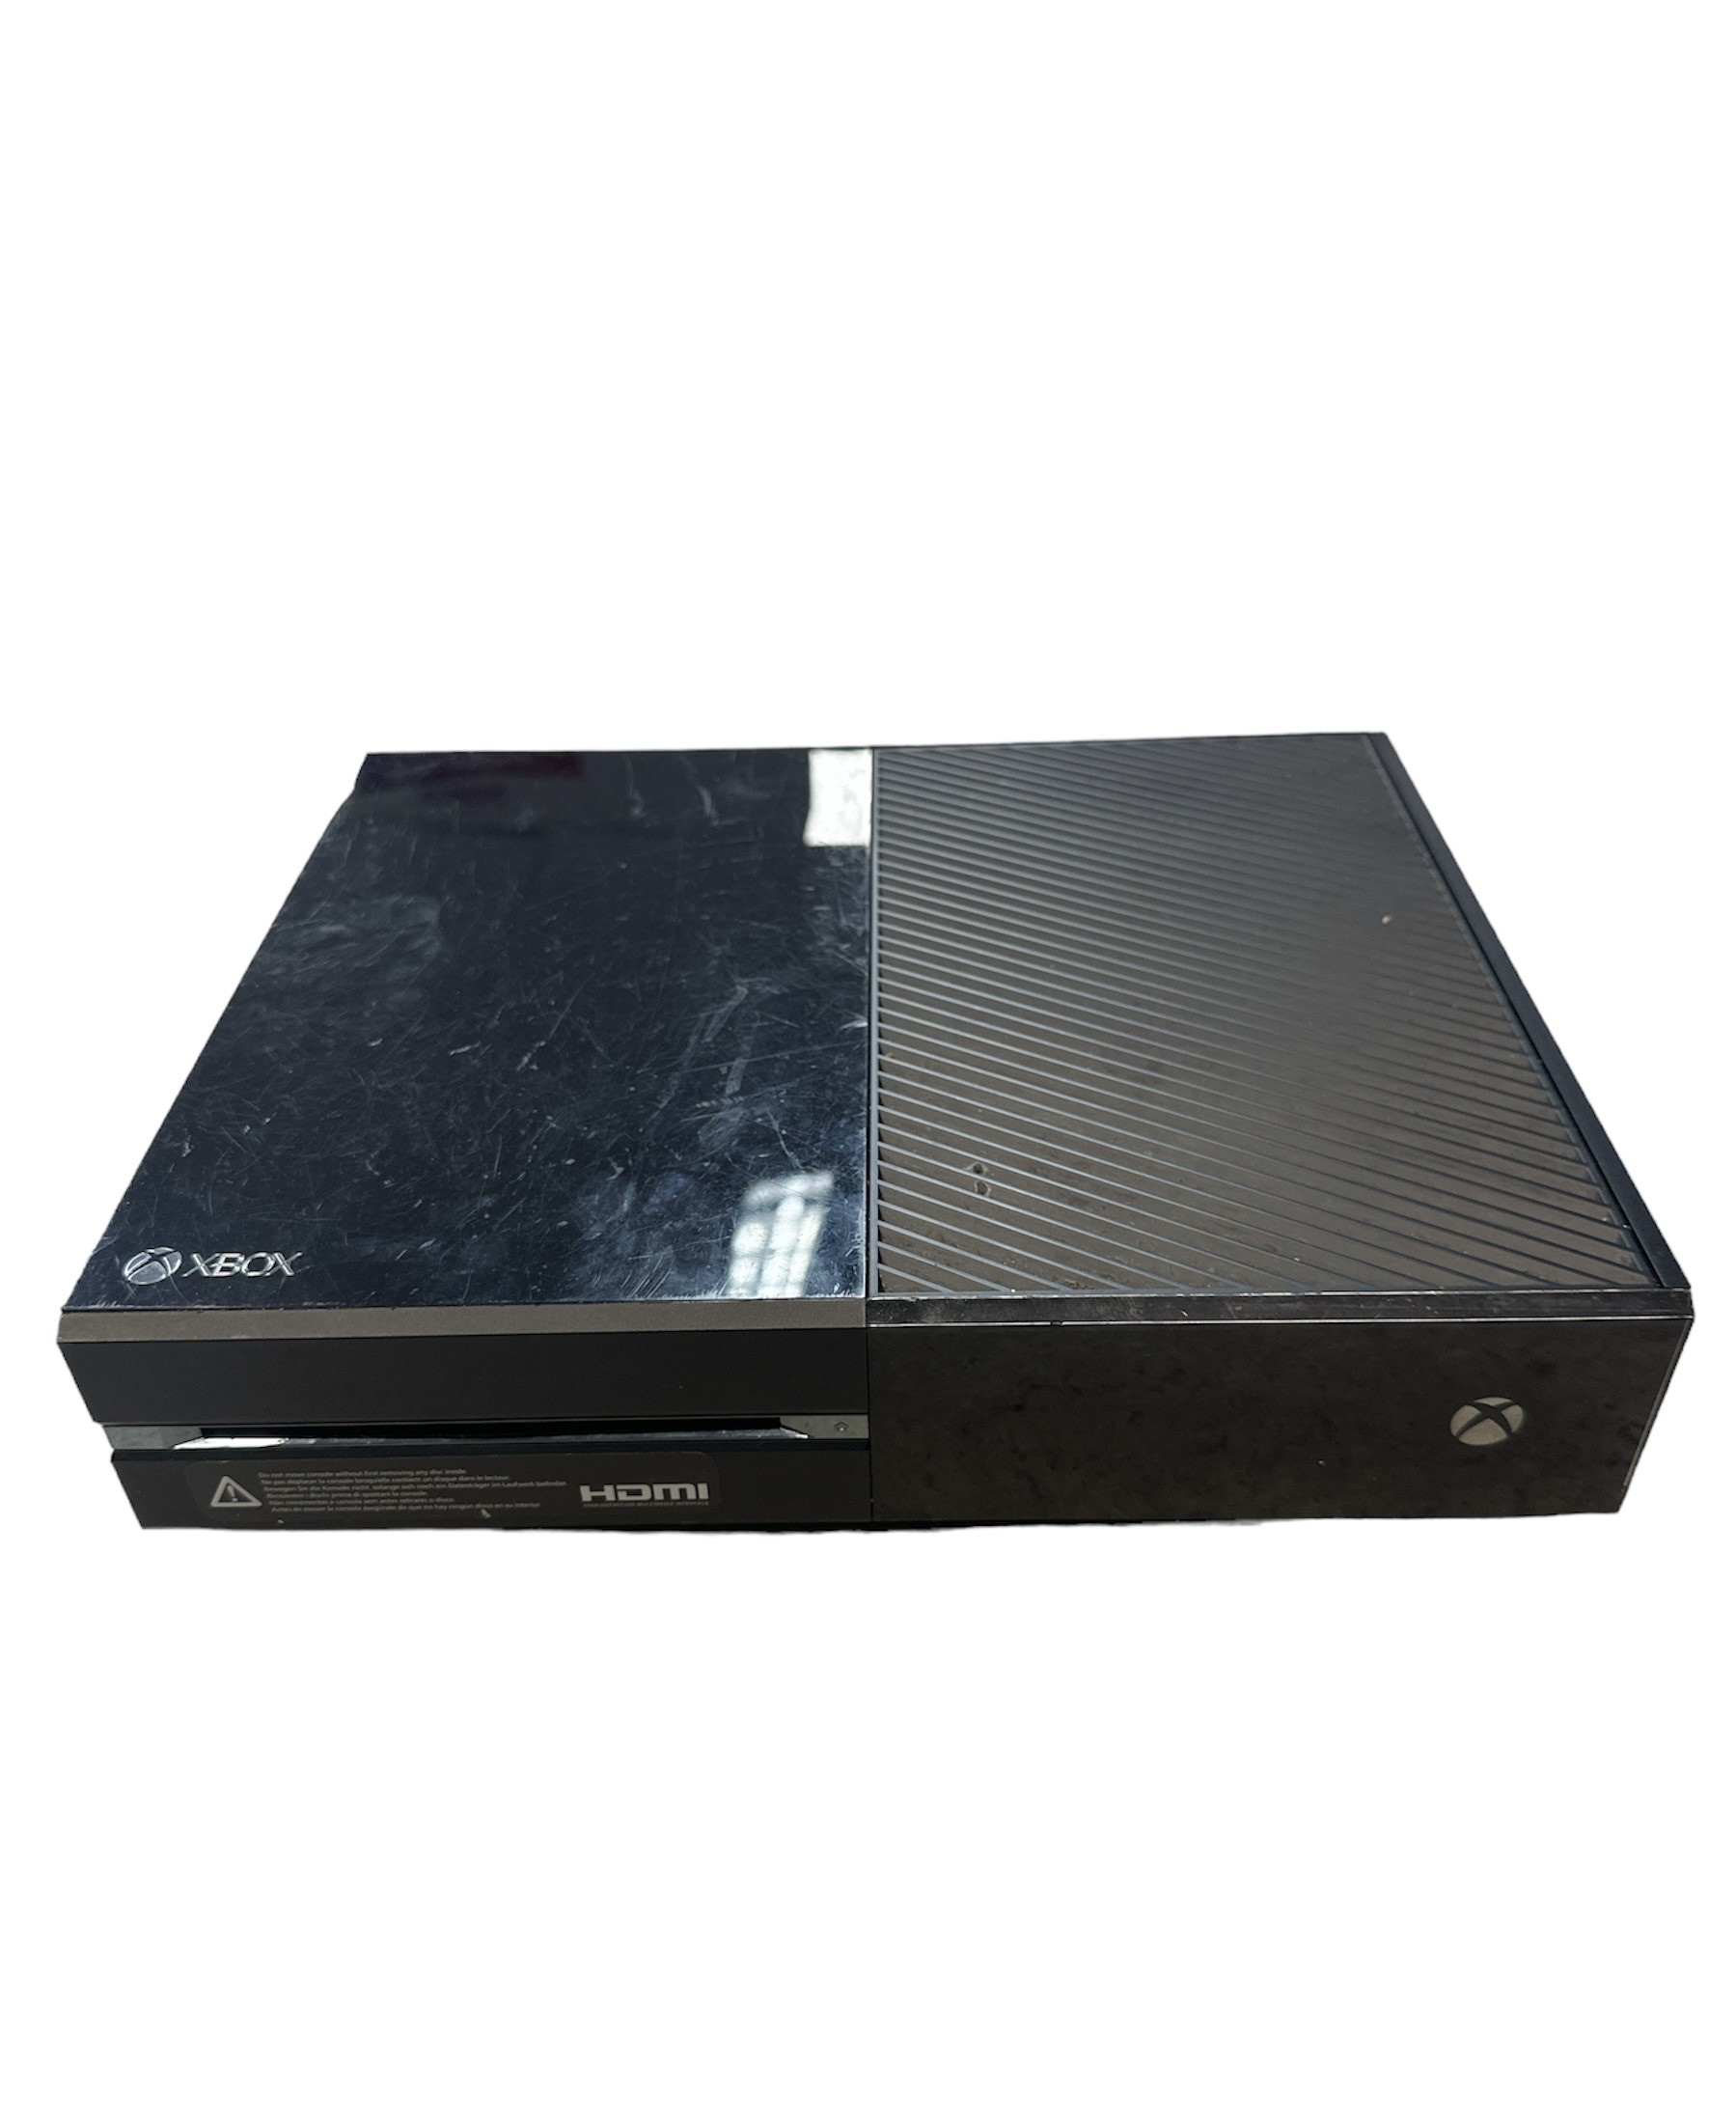 Xbox One - Black - 500gb - No Controller - B